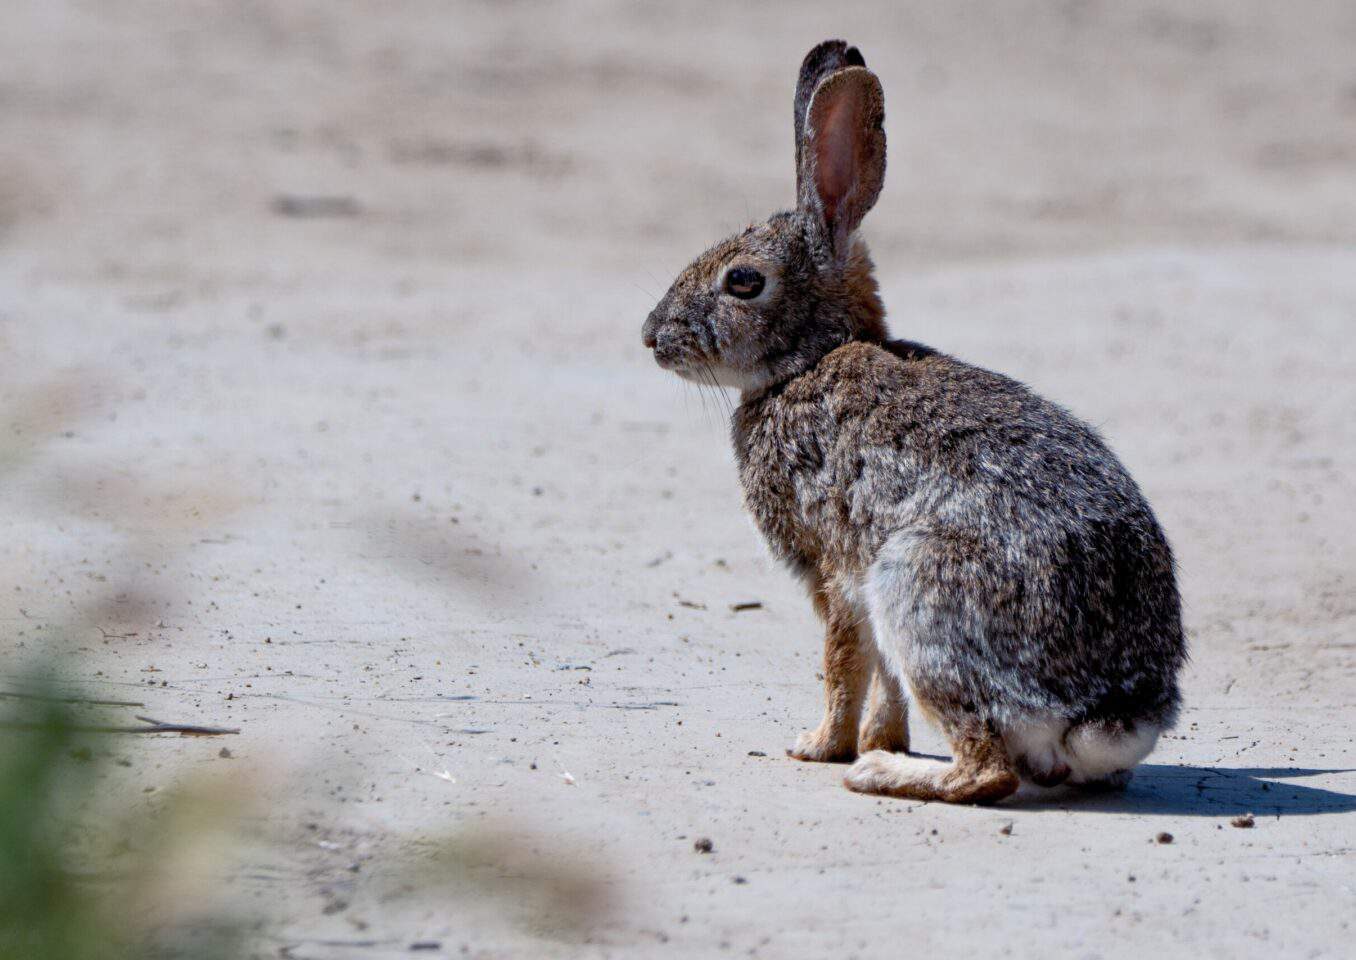 A desert cottontail (Sylvilagus audubonii) rabbit sits on a dirt trail in Los Angeles, California, USA